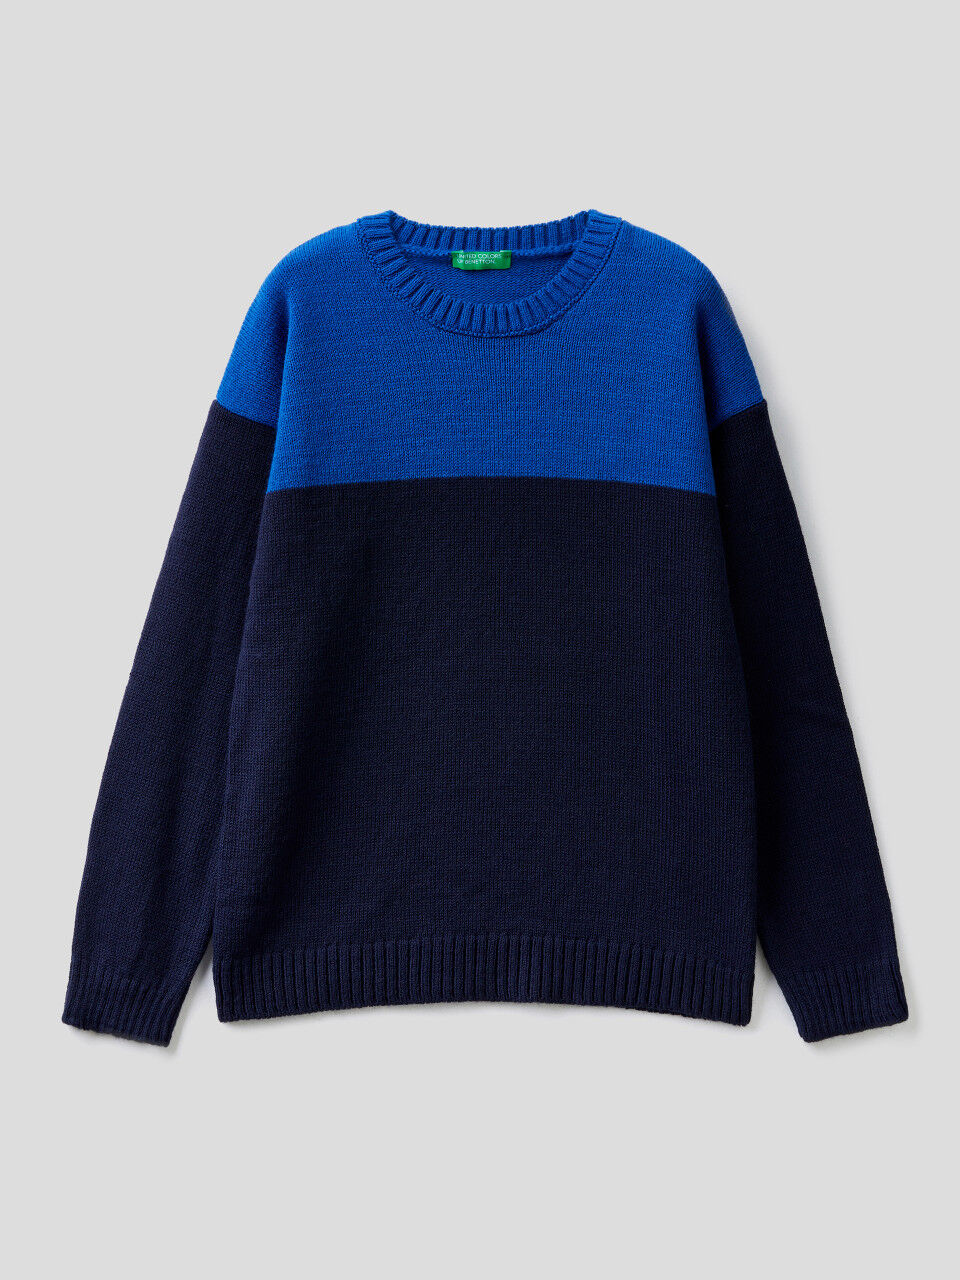 Vertbaudet jumper Navy Blue 8Y discount 83% KIDS FASHION Jumpers & Sweatshirts Knitted 